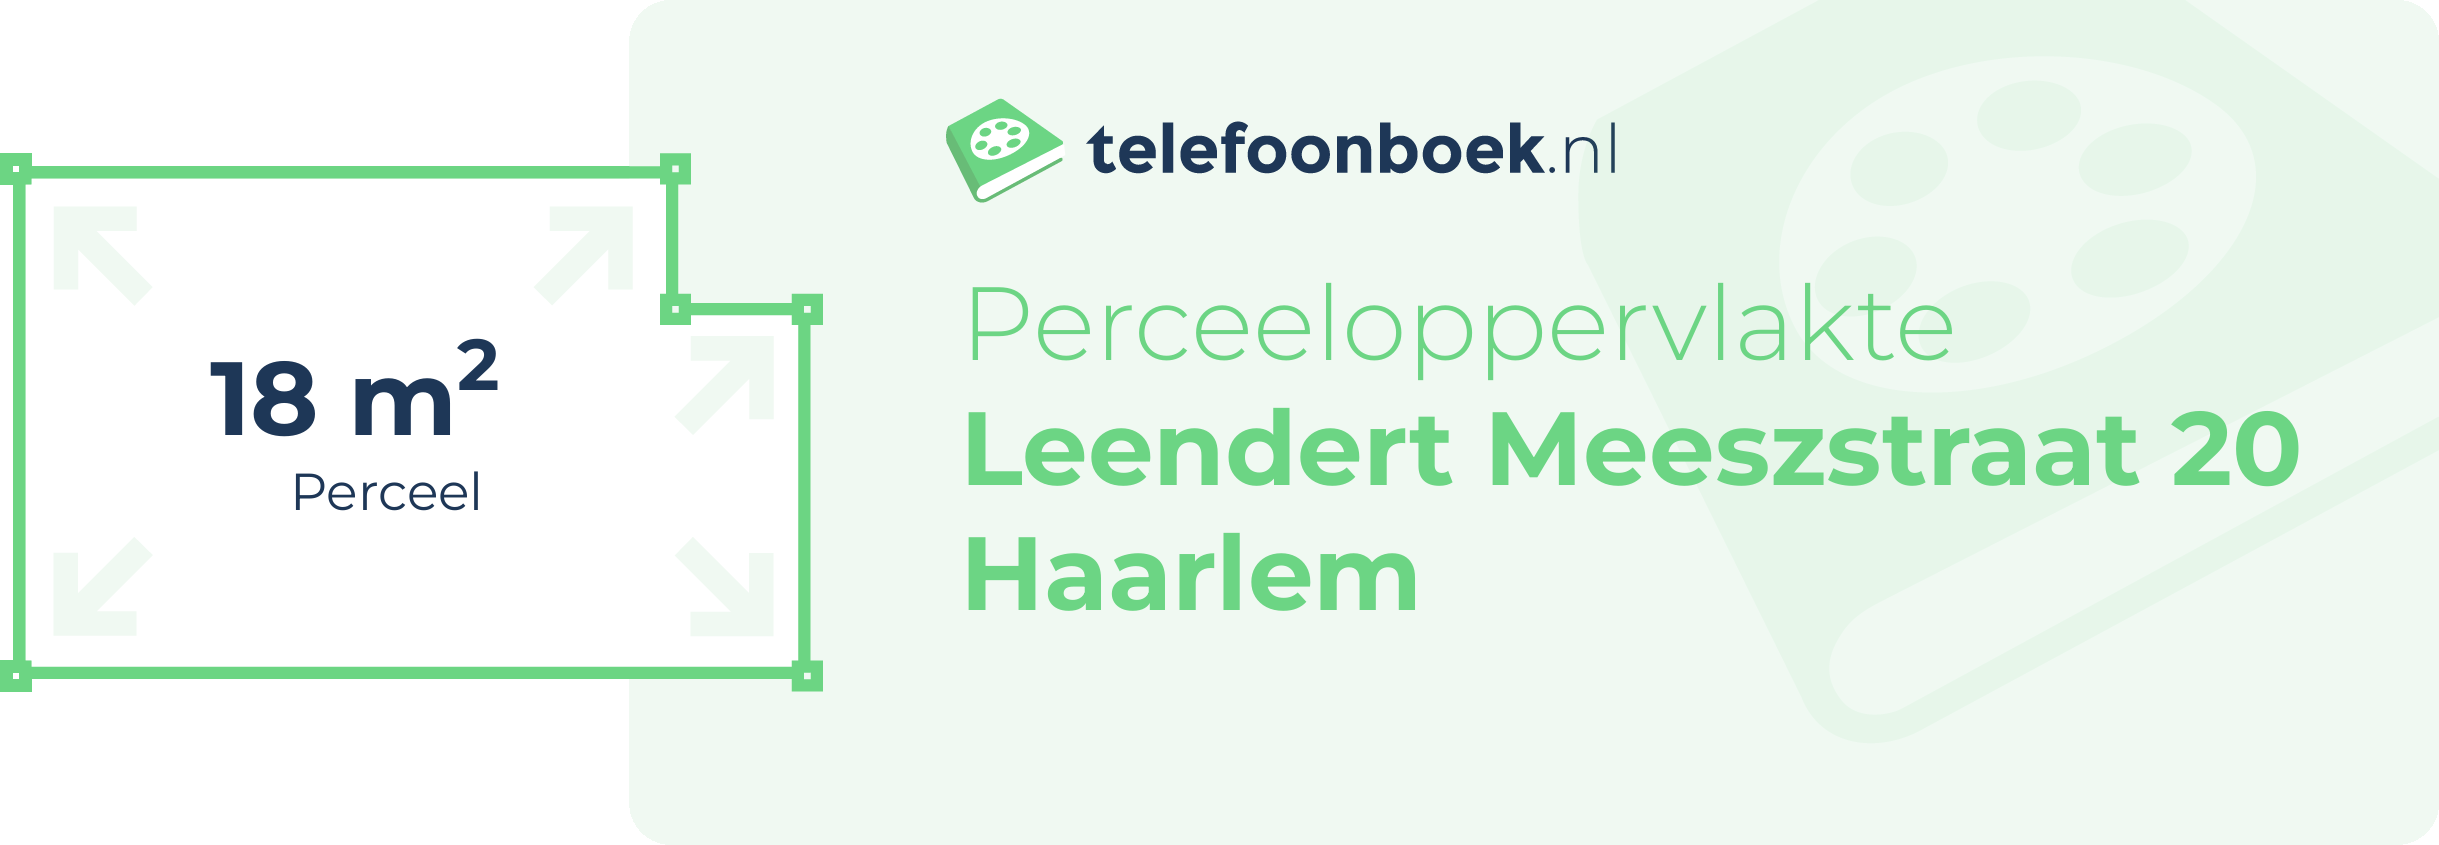 Perceeloppervlakte Leendert Meeszstraat 20 Haarlem